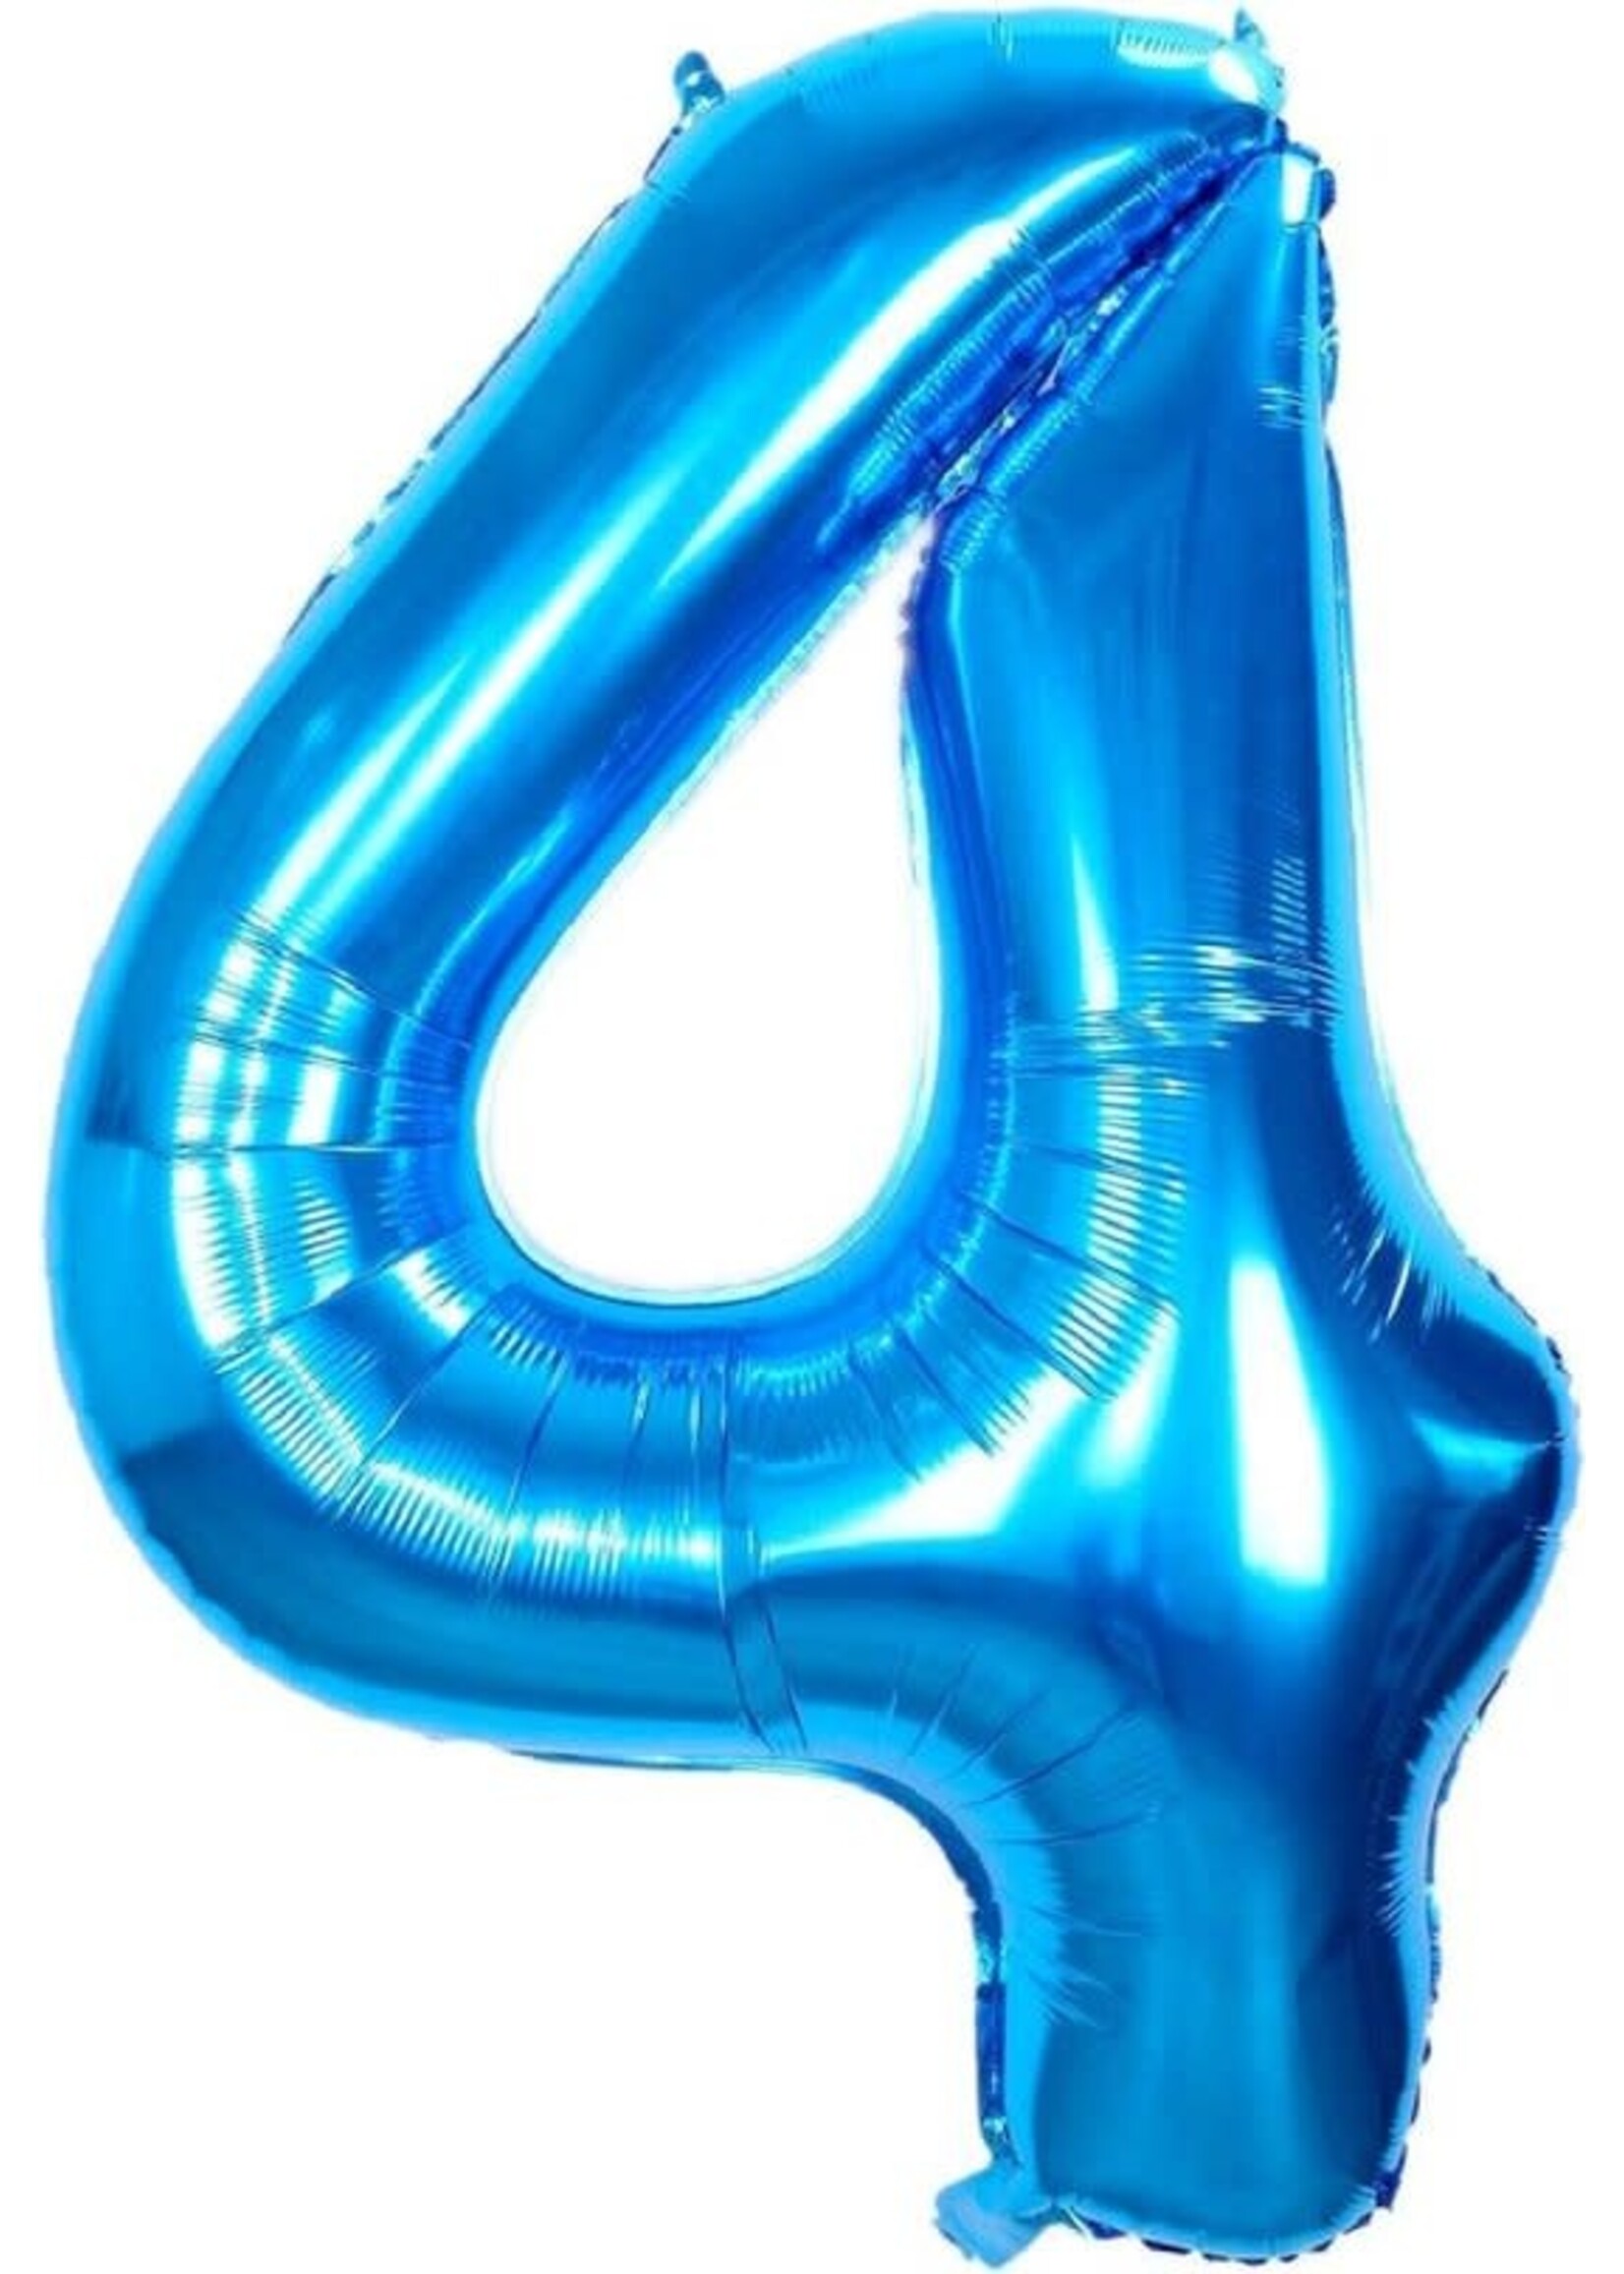 Cijferballon 4, blauw